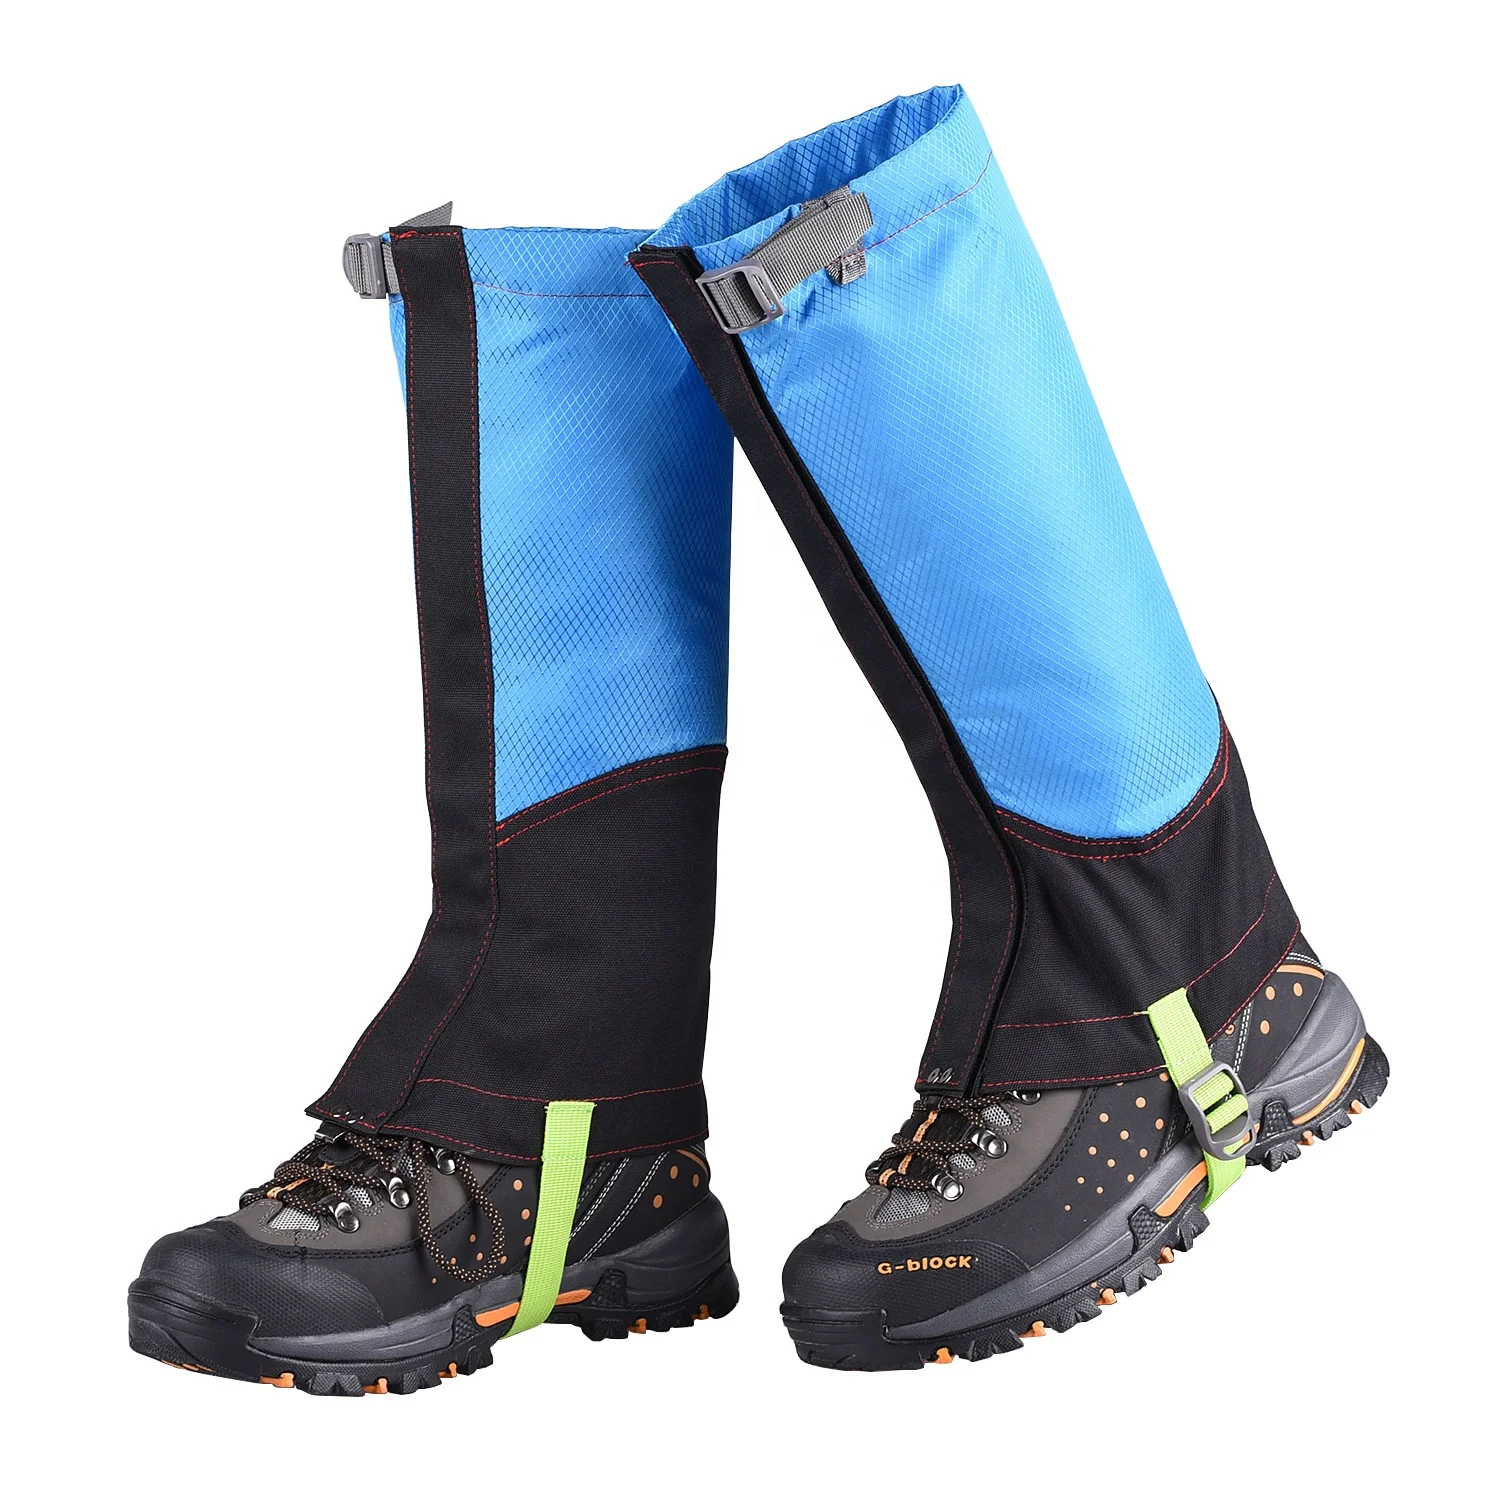 

Outdoor Hiking Trekking Waterproof Snow Snake Proof Legging Gaiters for Camping Climbing, Black/blue/red